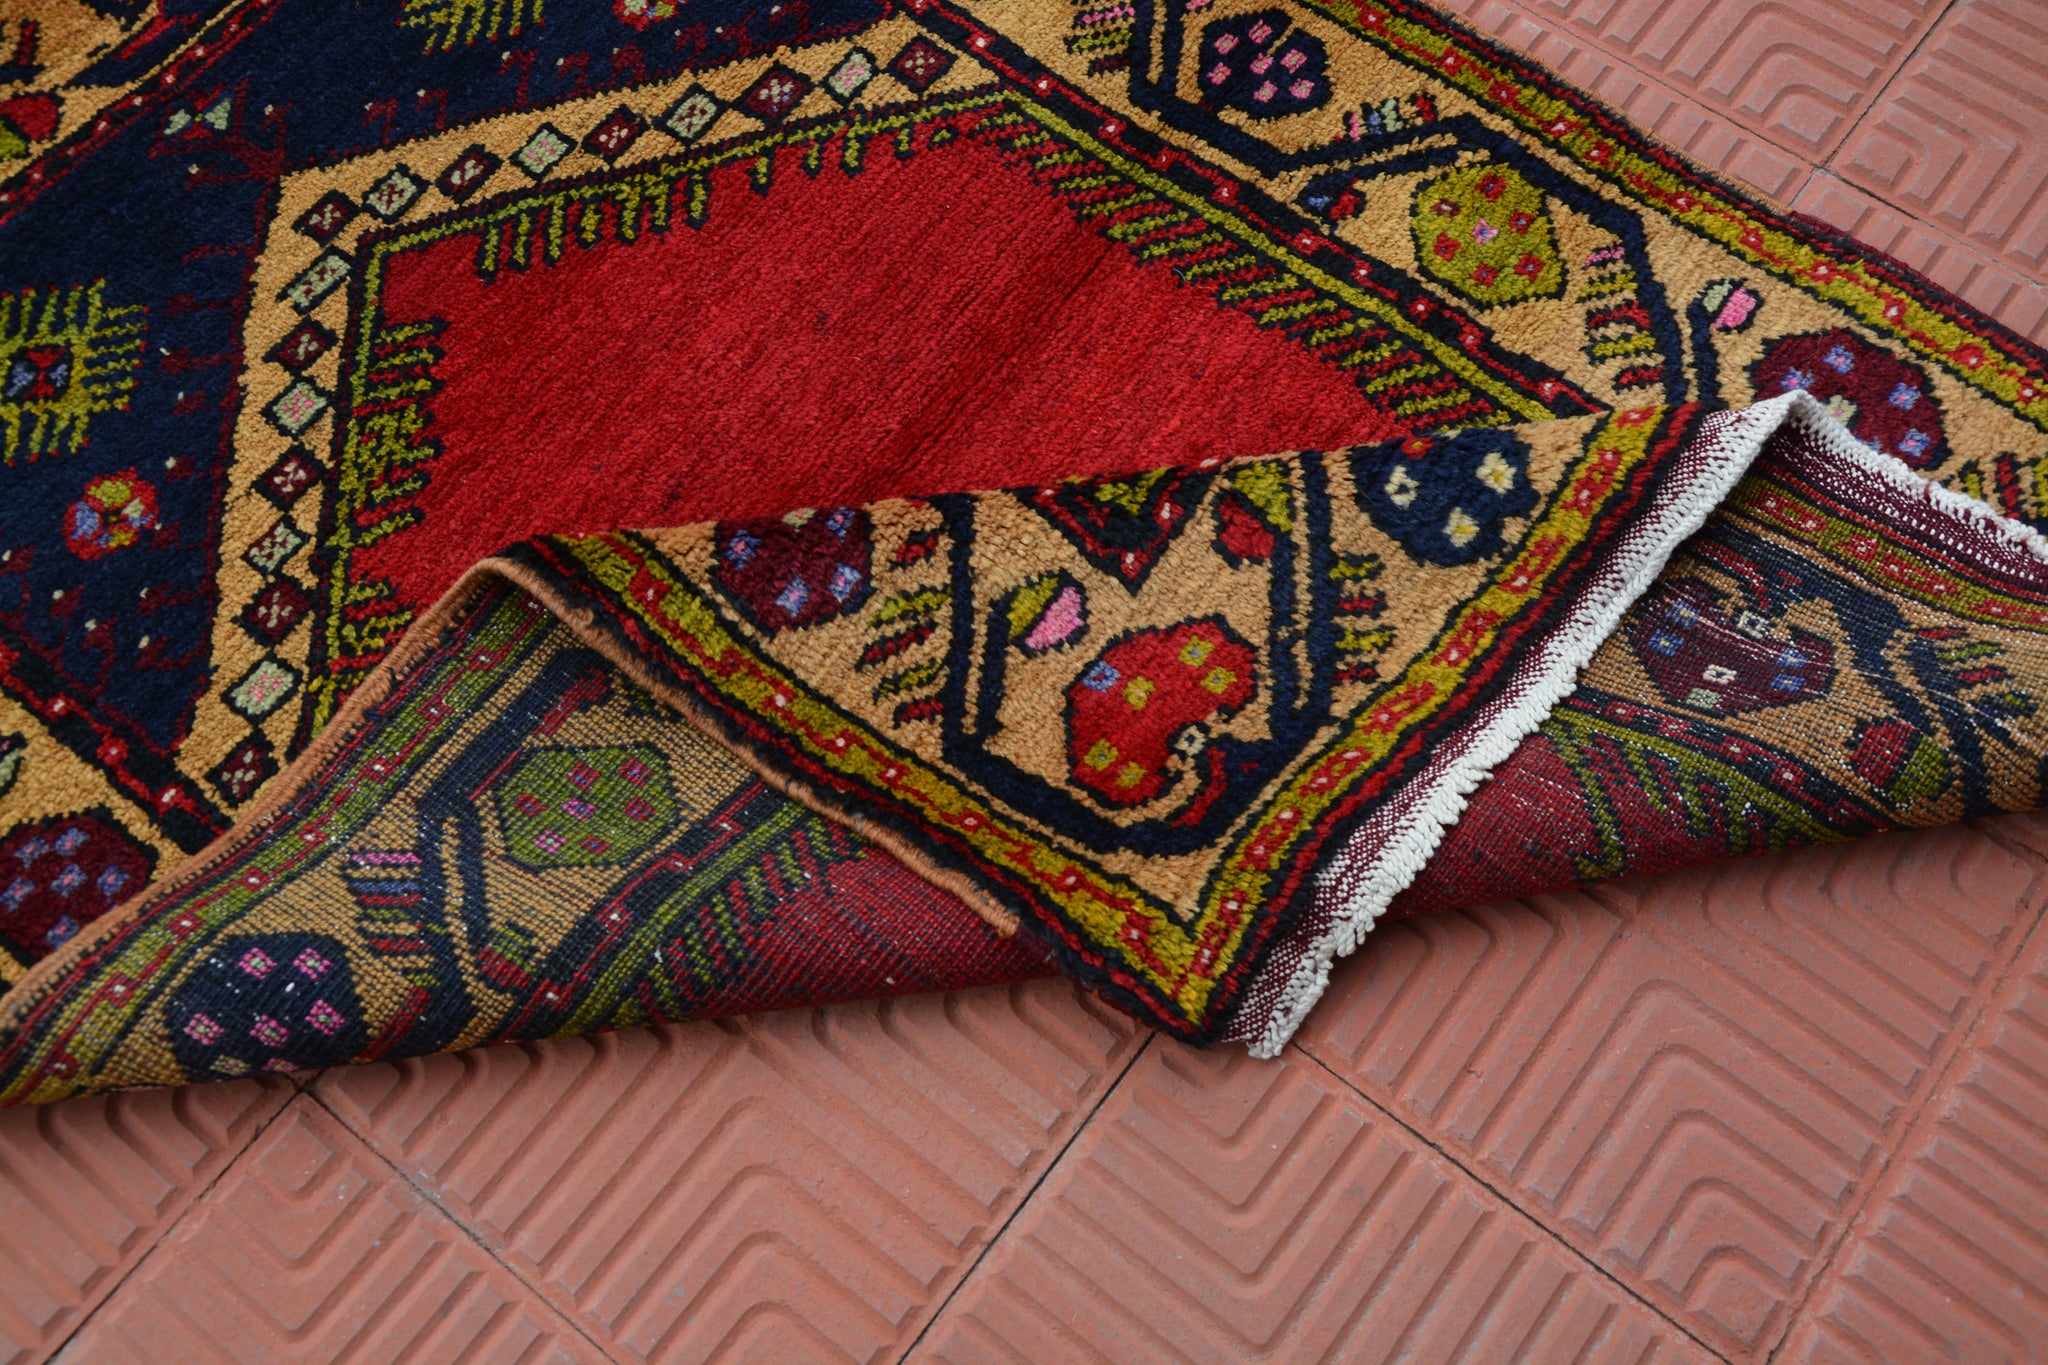 3x5 Turkish Vintage Oushak Rug, Door Mat Small Carpet, Handmade